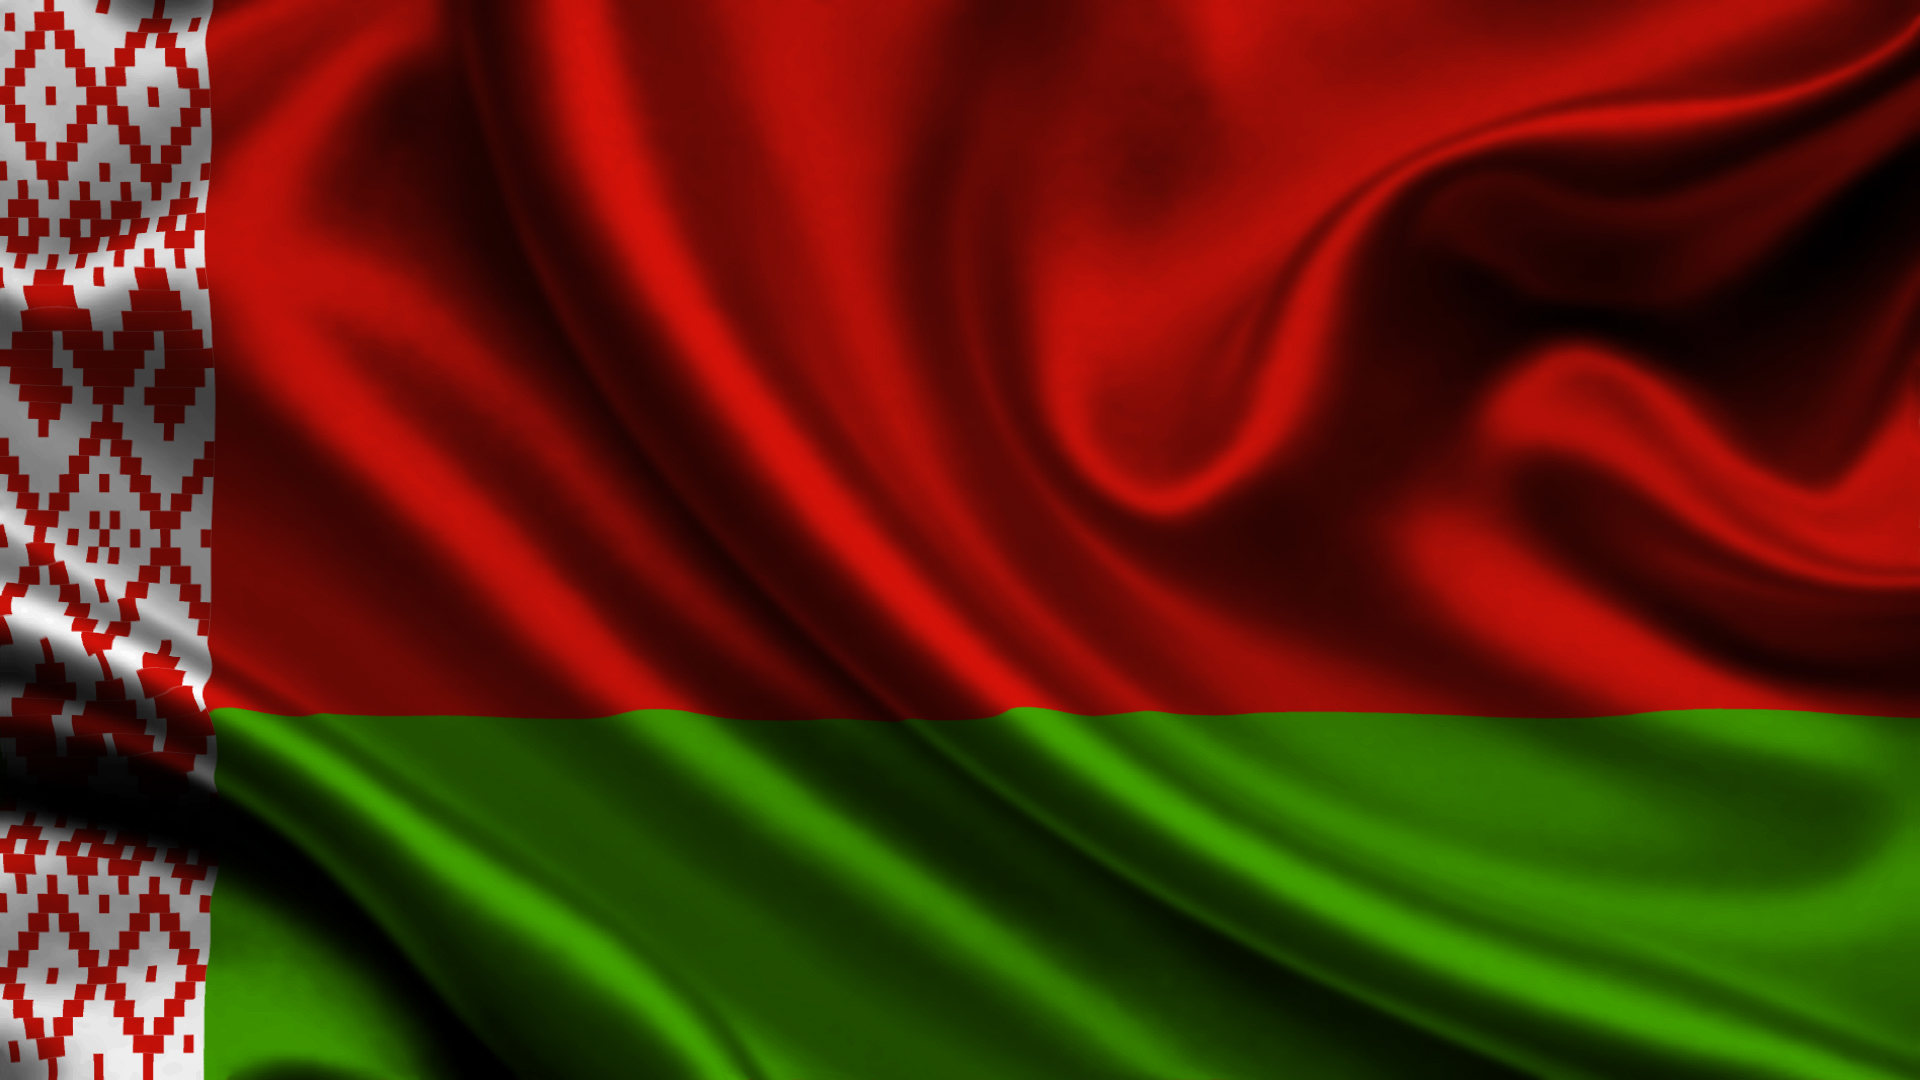 Tapeta Białoruś Flaga w paski 1920x1080 Paski